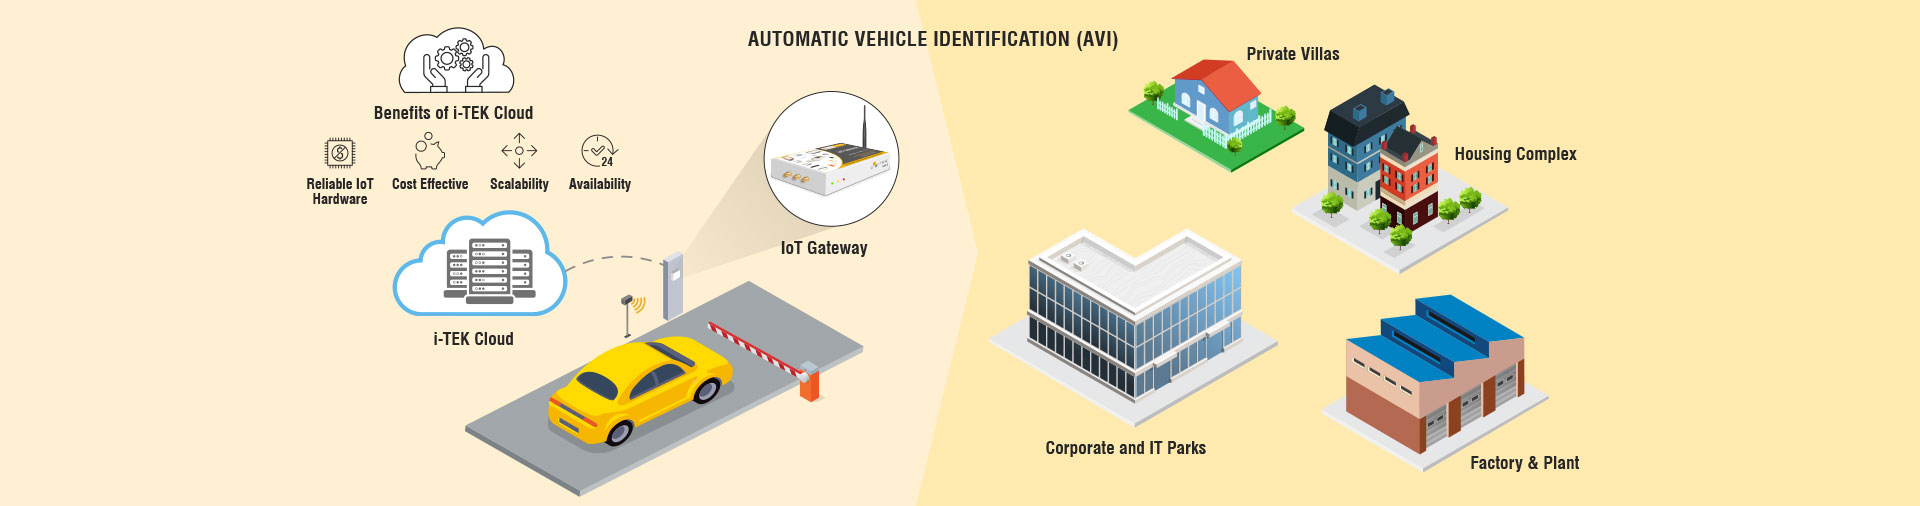 Automatic Vehicle Identification